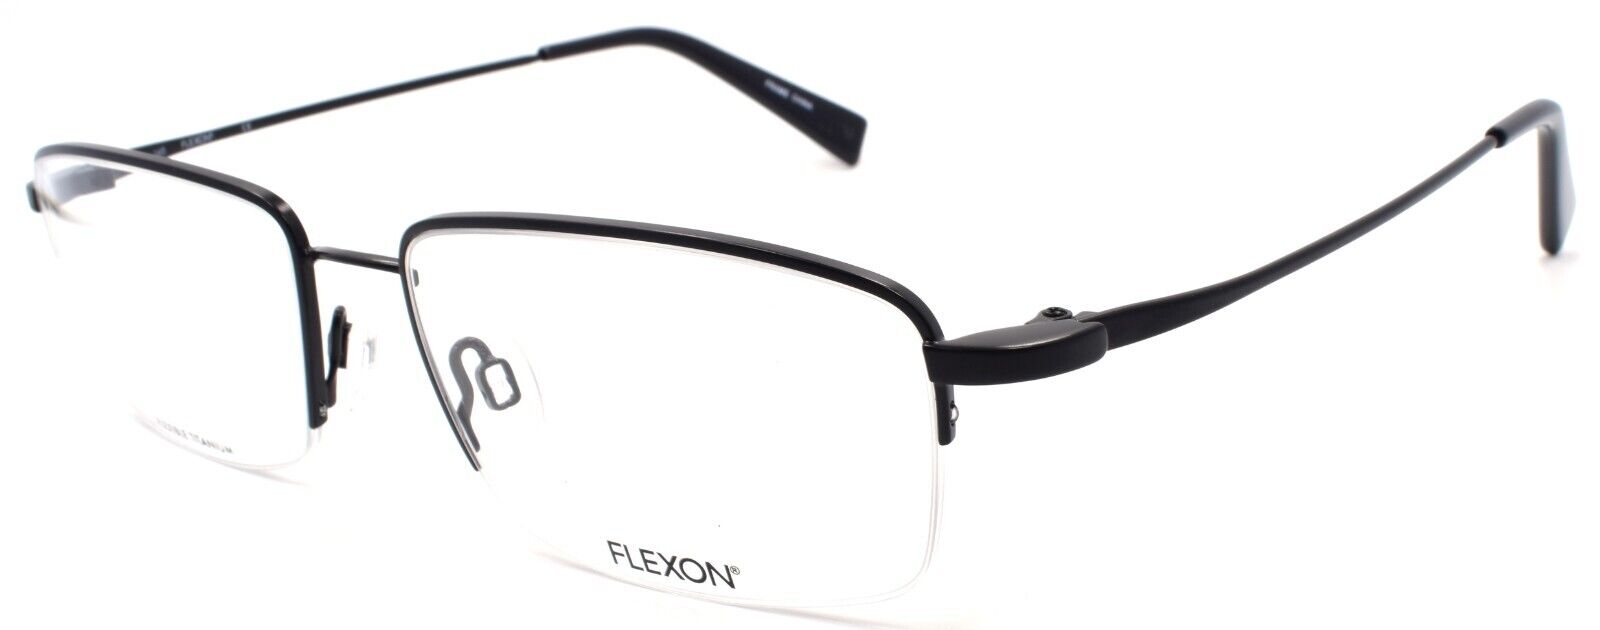 2-Flexon FLX 908 MAG 001 Men's Eyeglasses Black 57-18-145 + Clip On Sunglasses-883900204163-IKSpecs